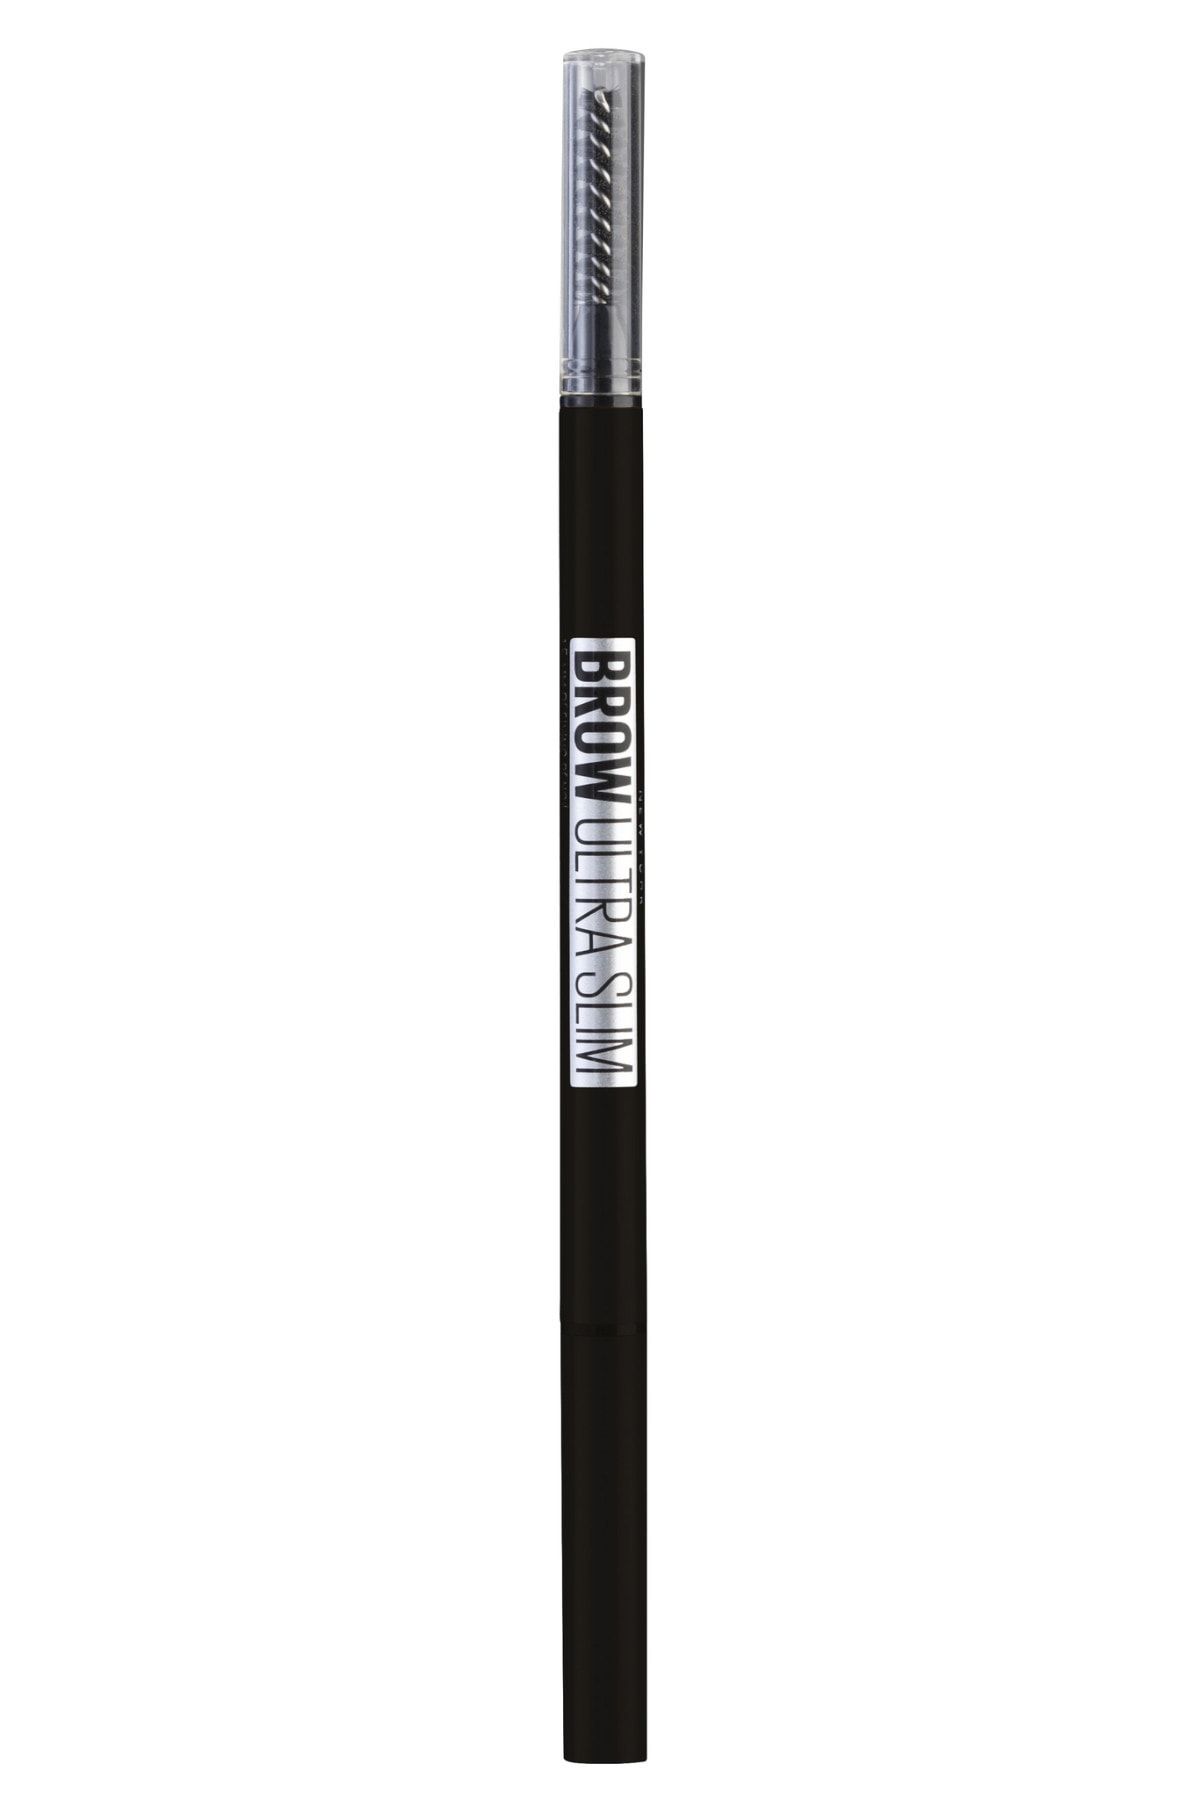 Maybelline New York مداد ابرو Brow Ultra Slim دو طرفه شماره 05 رنگ قهوه ای تیره